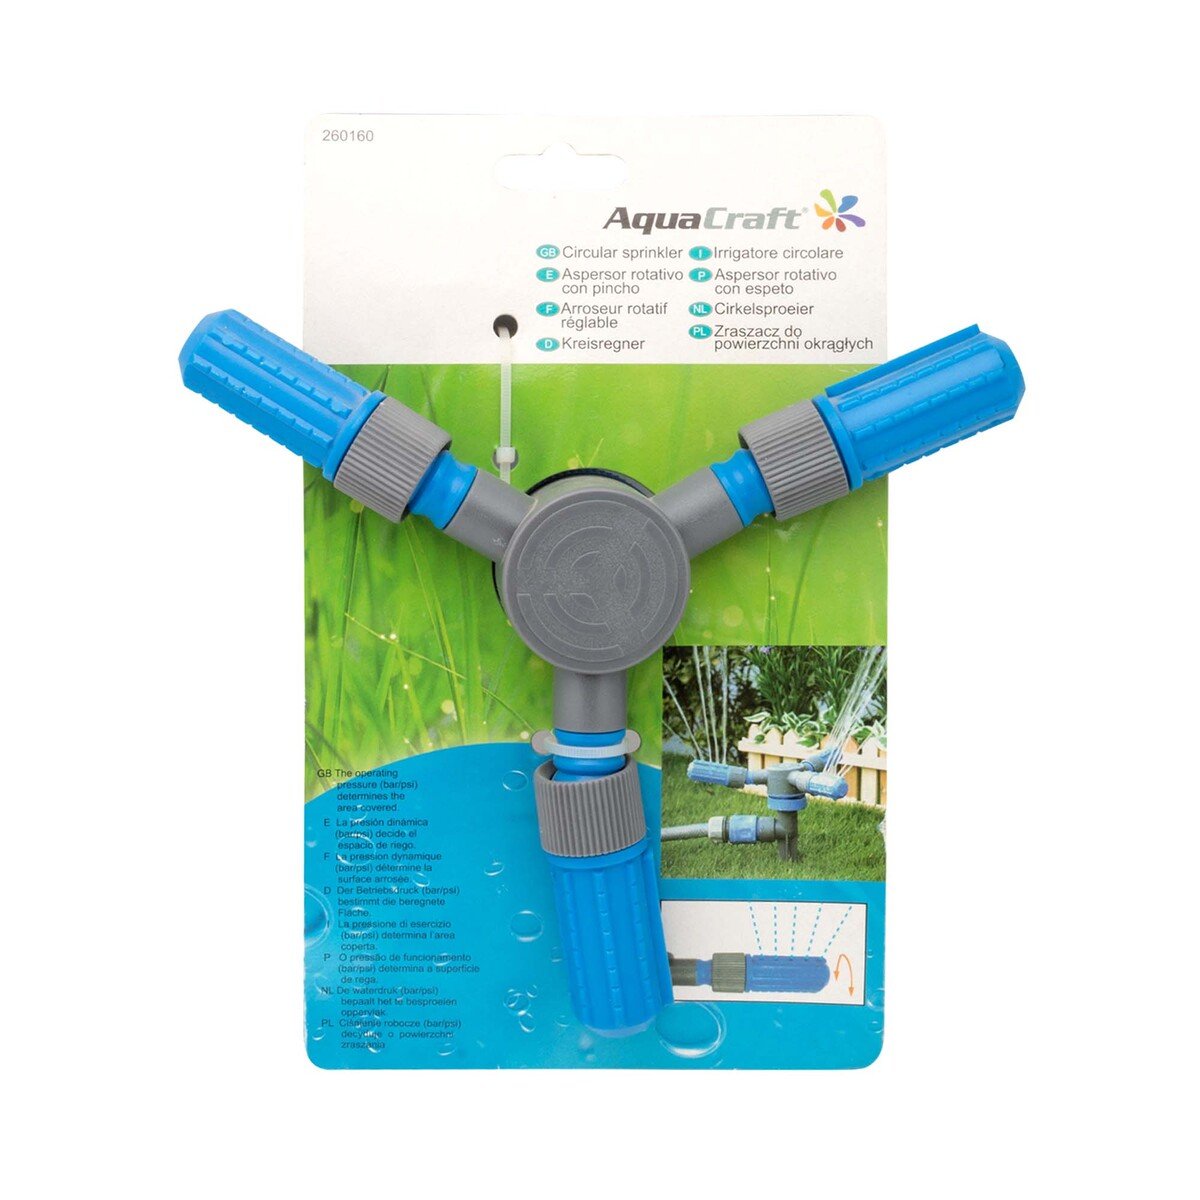 Aquacraft Revolving Water Sprinkler, Blue, 260160